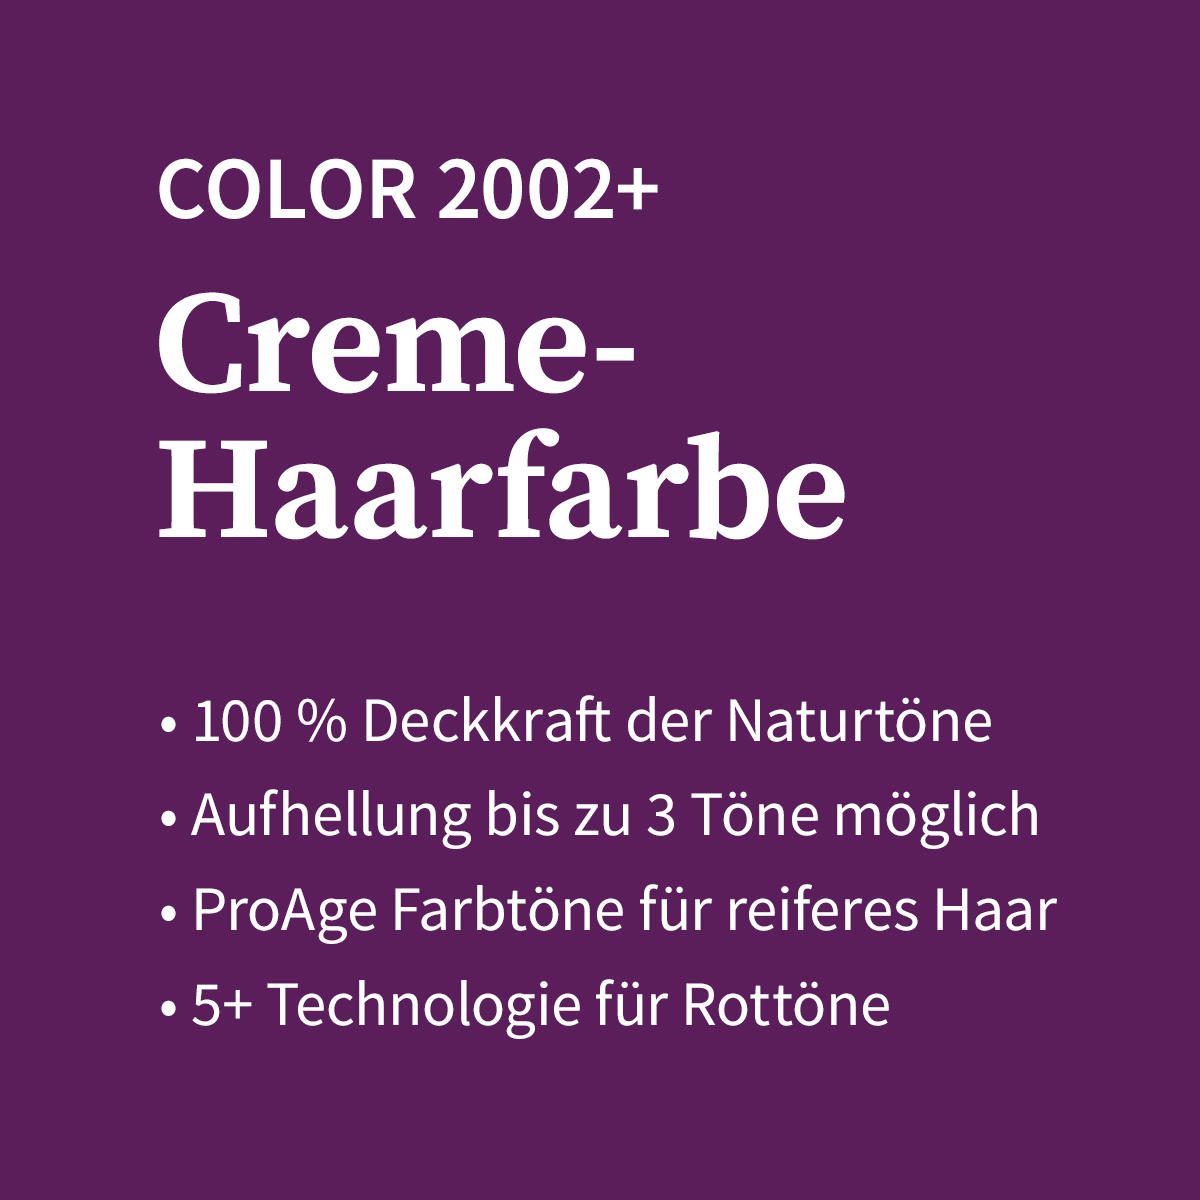 Basler Color 2002+ Cremehaarfarbe 9/3 hell hellblond gold, Tube 60 ml - 4